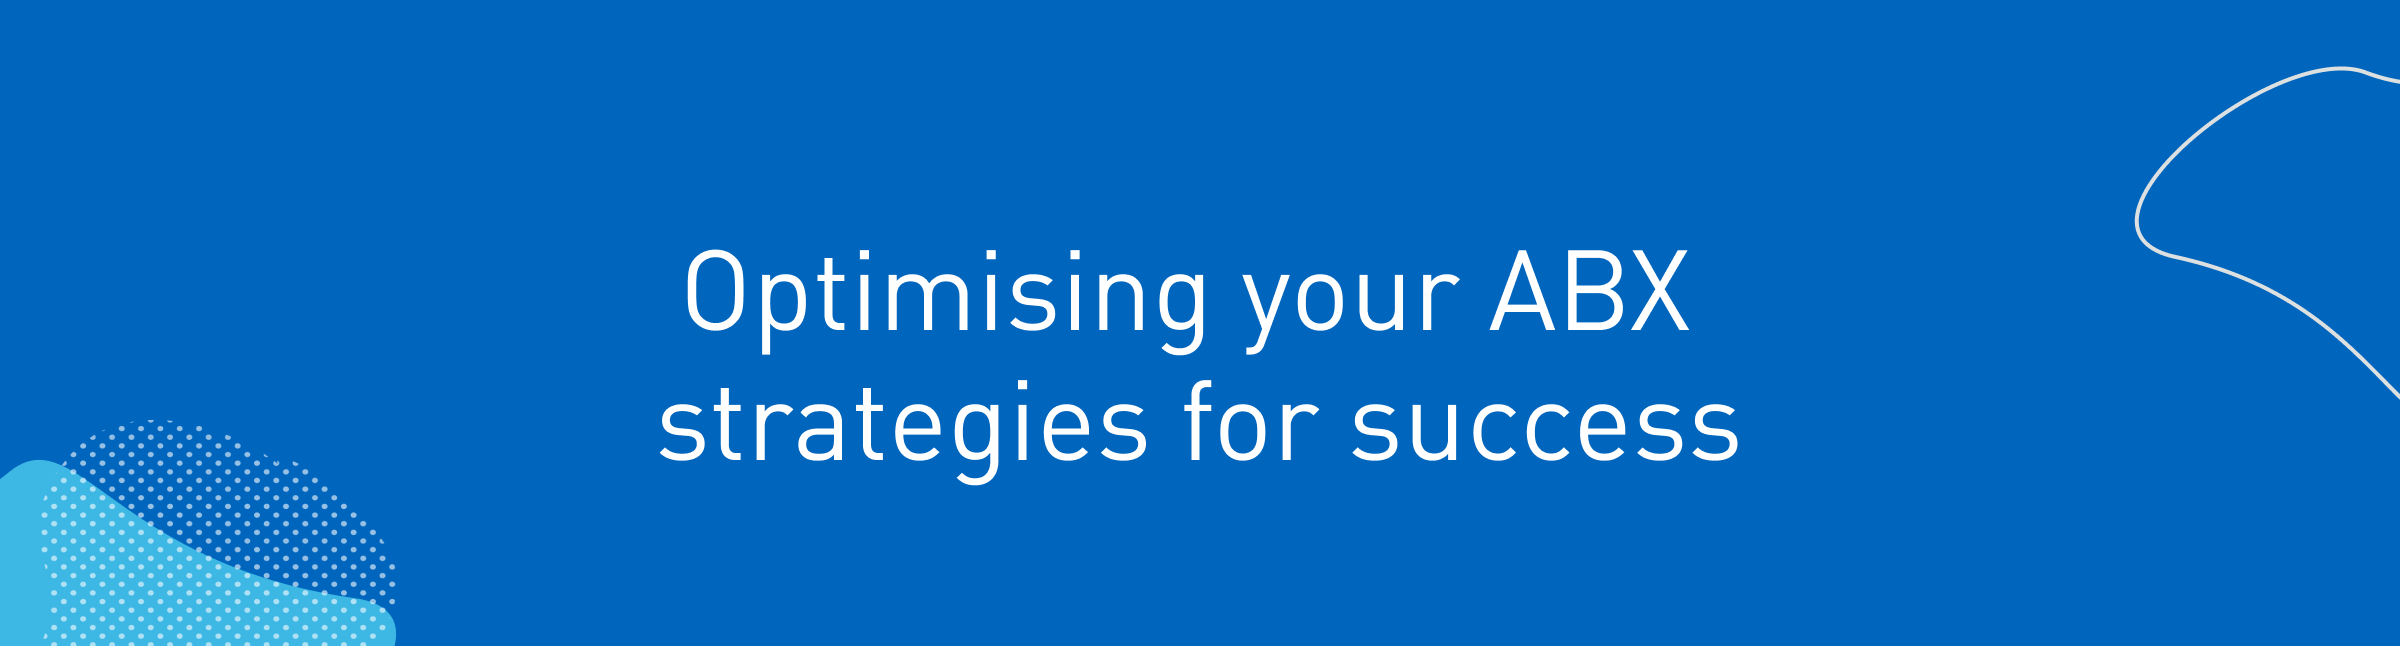 2954: Optimising your ABX strategies for success